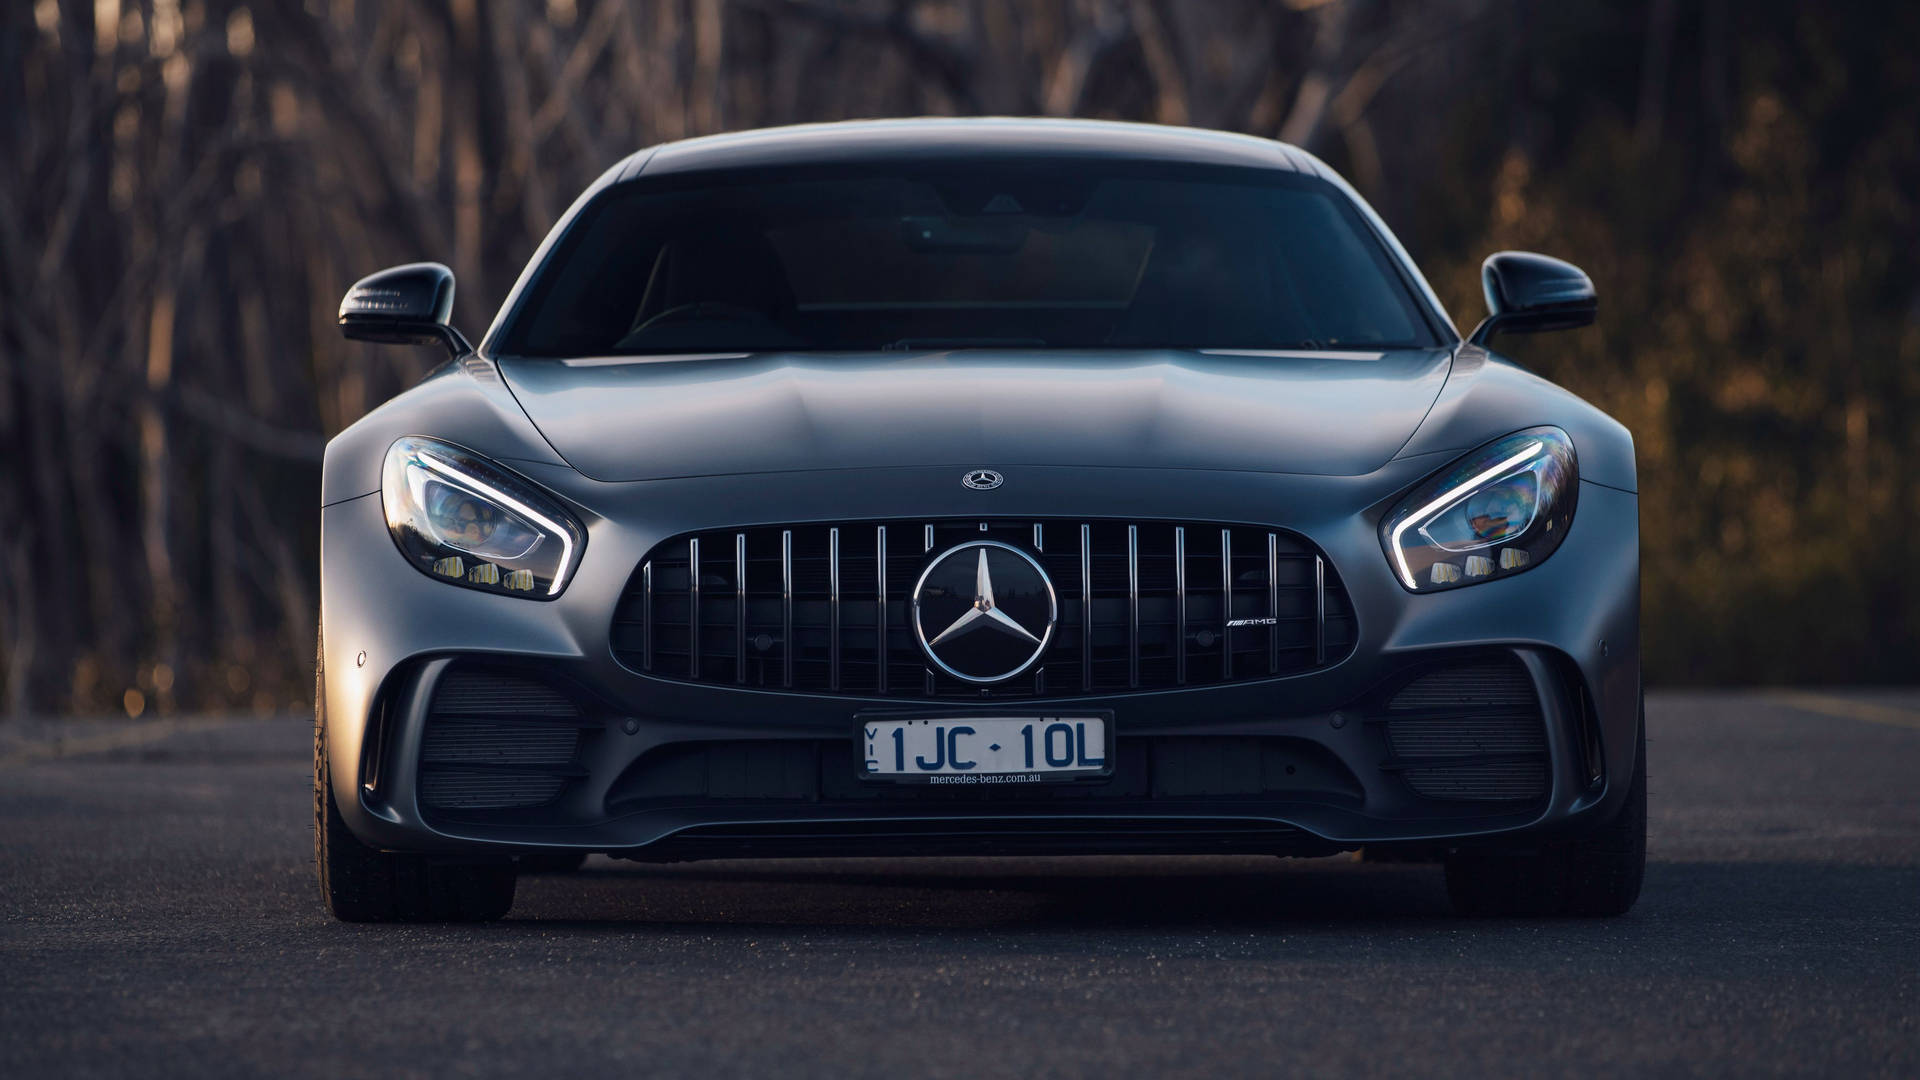 Top 999+ 4k Mercedes Wallpaper Full HD, 4K✅Free to Use